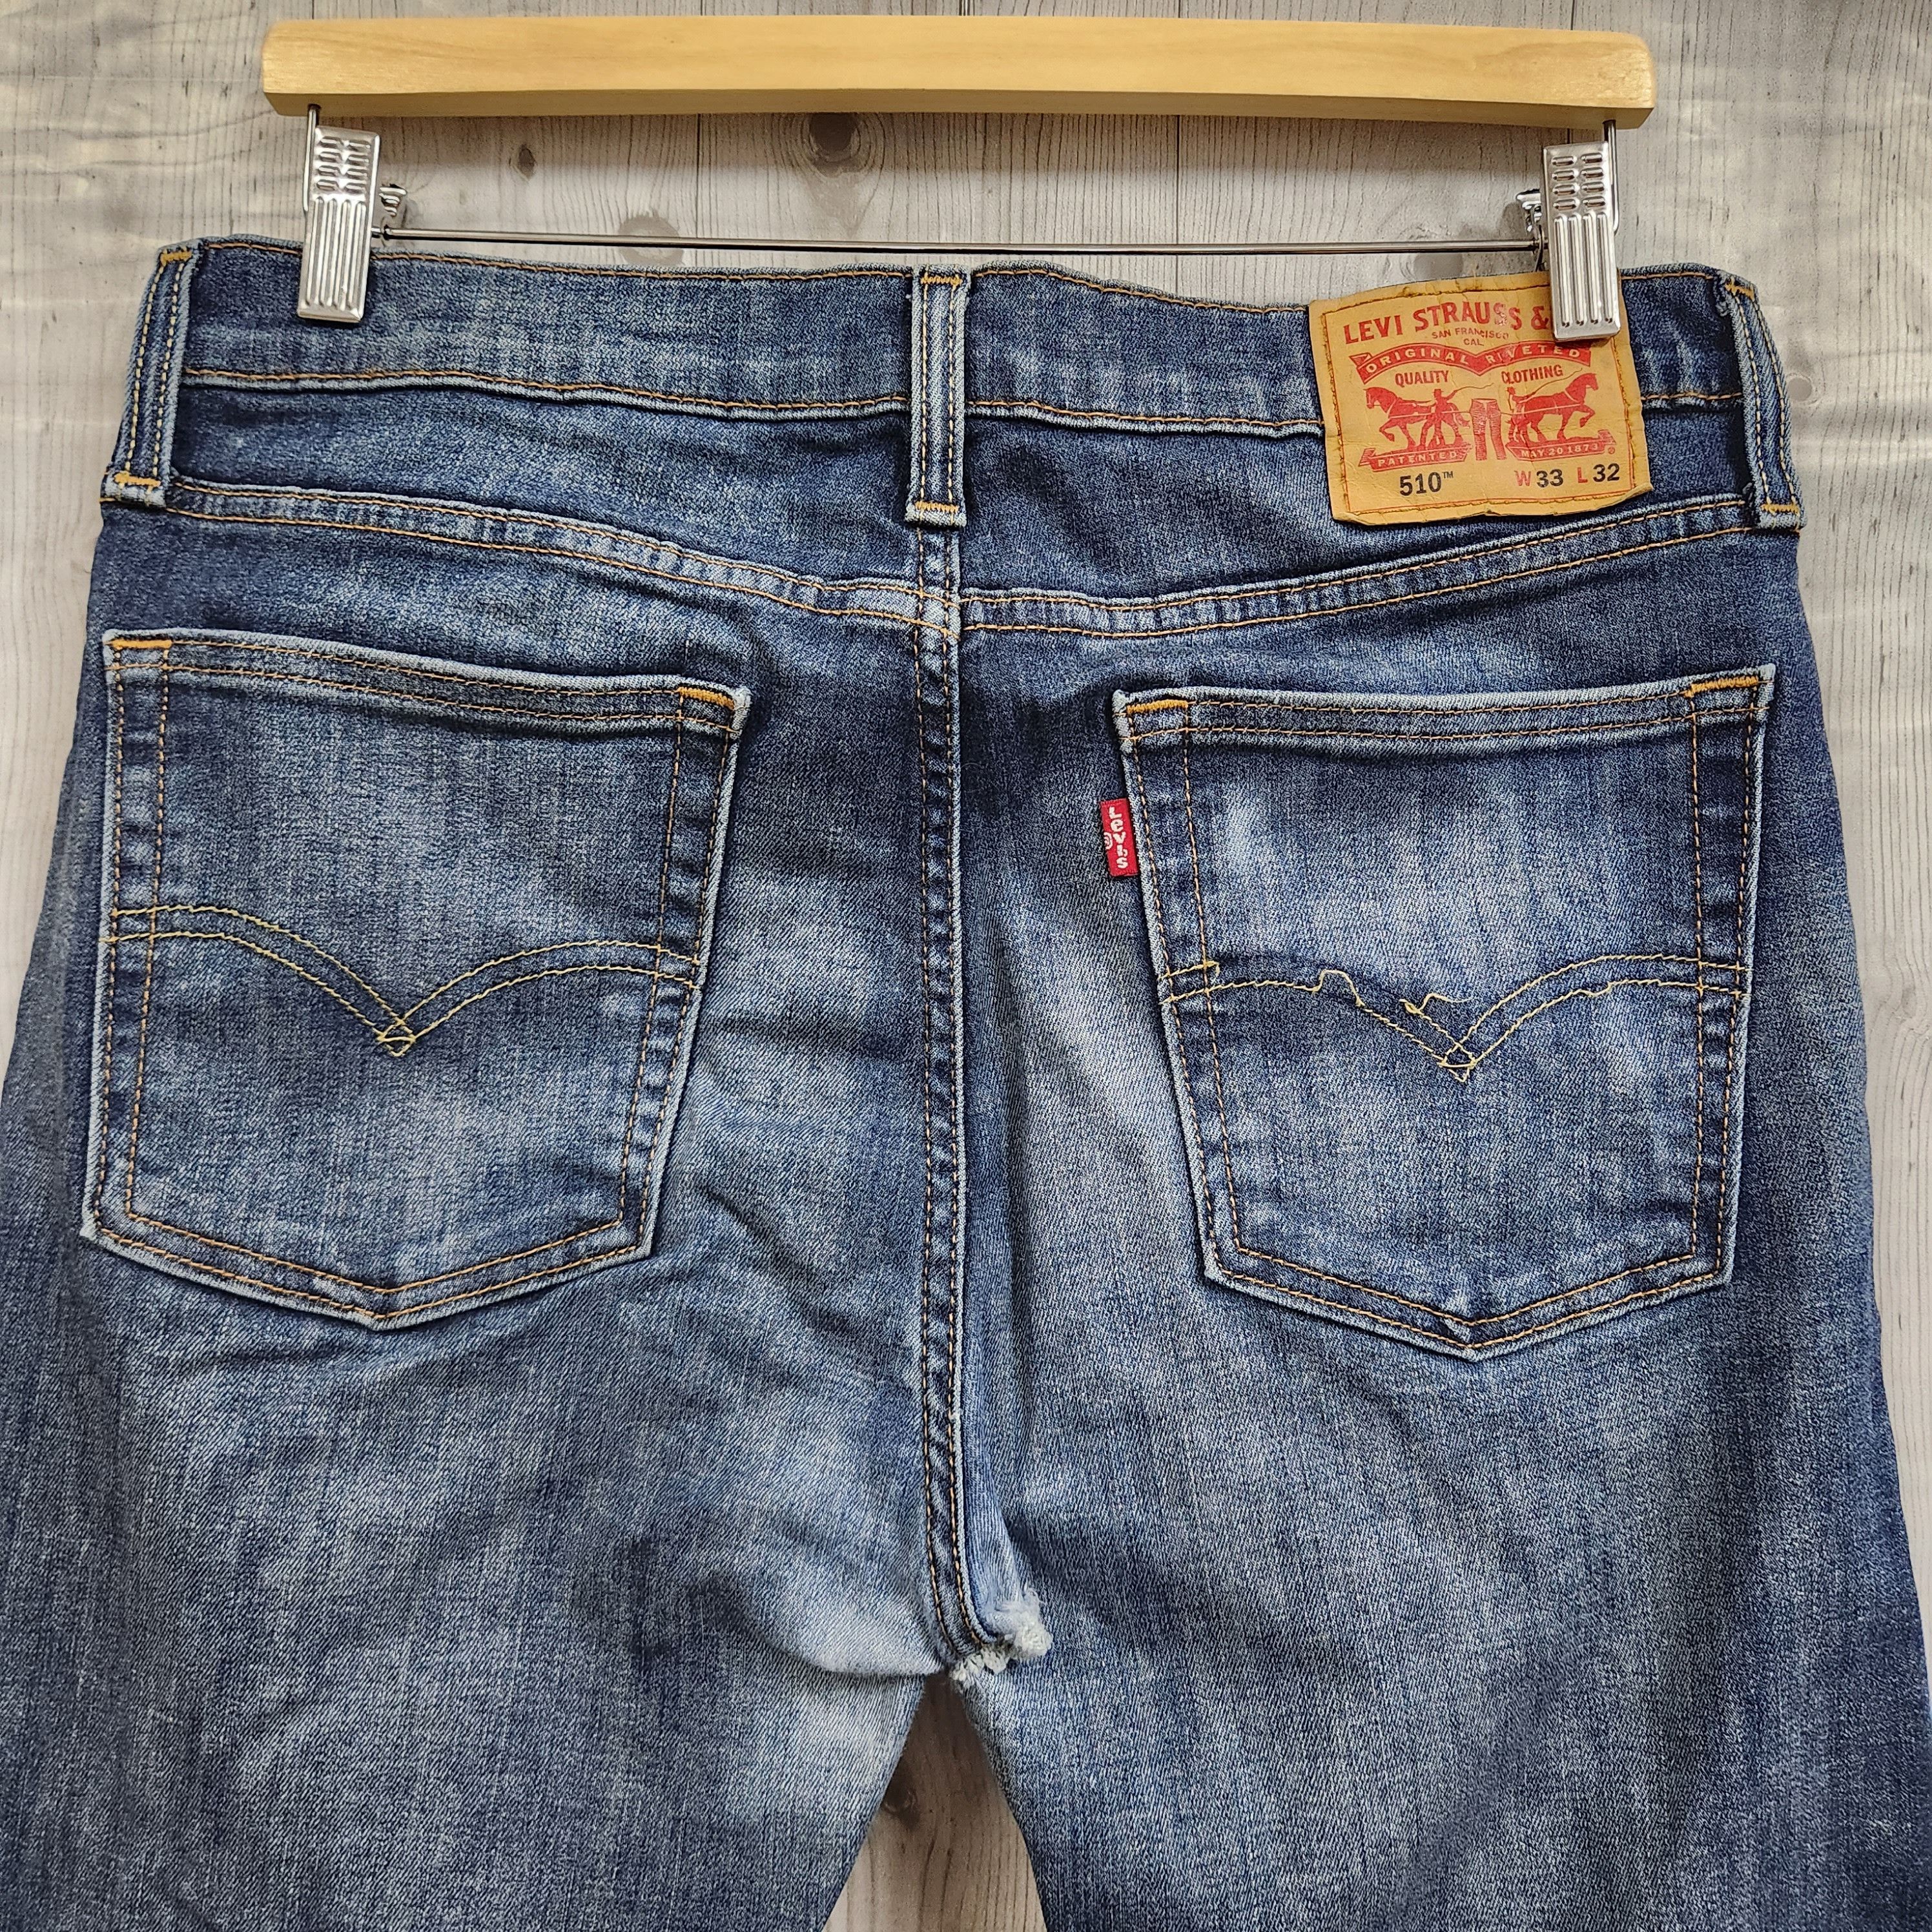 Levi's 510 Blue Denim Jeans - 13